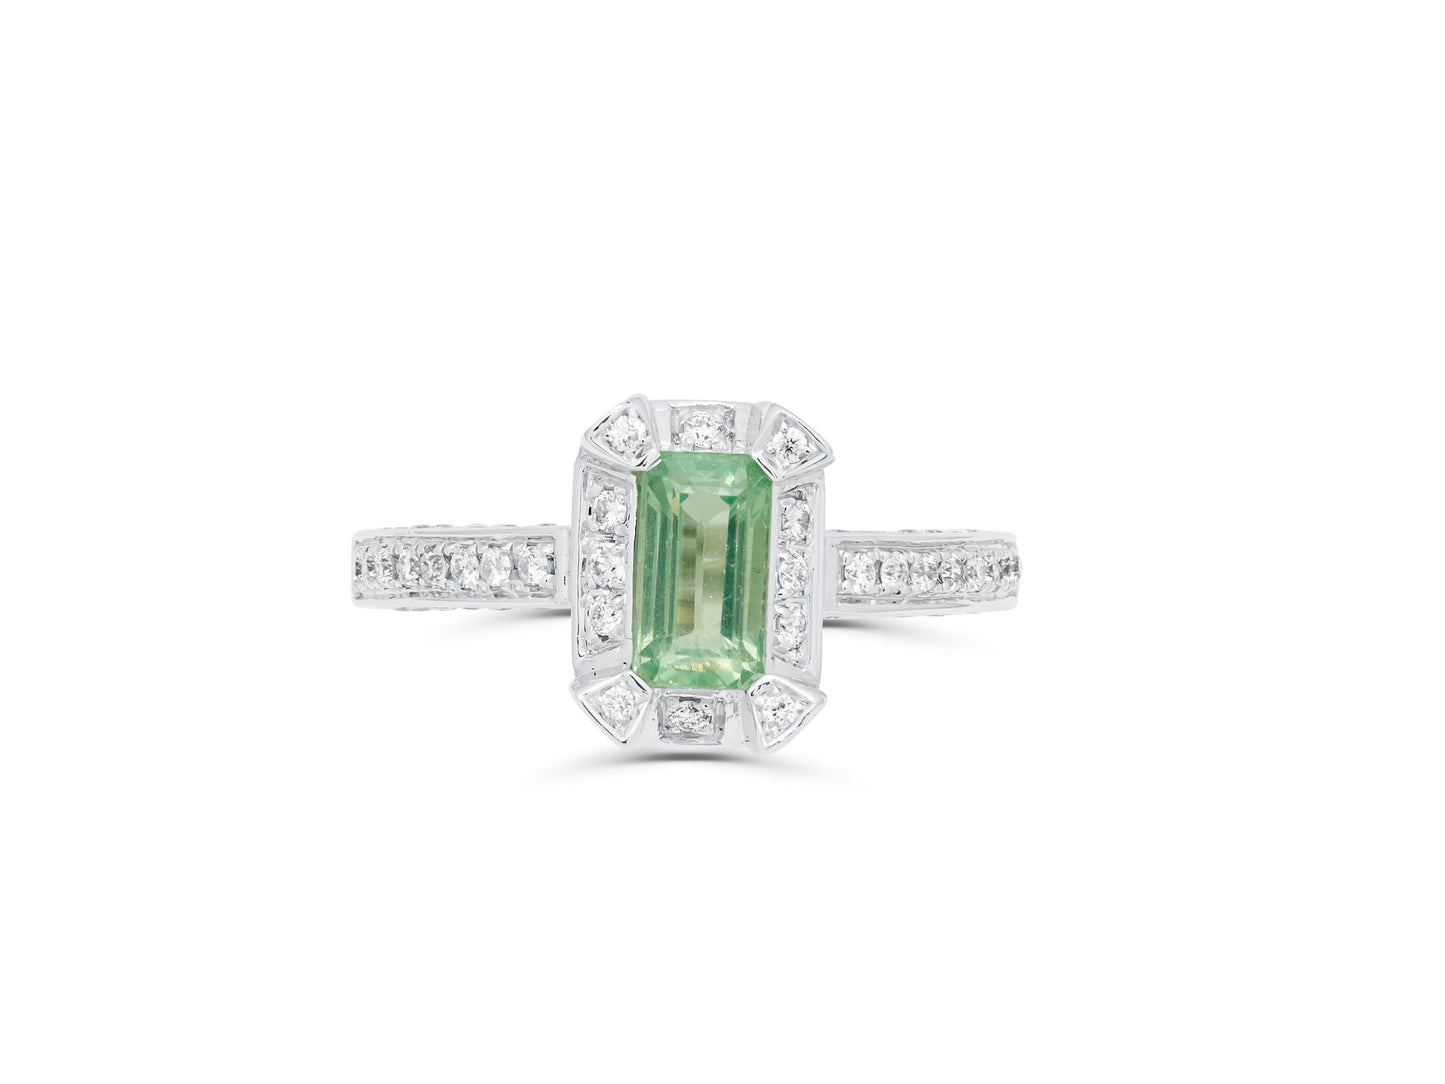 African Garnet Emerald Cut White Gold Ring